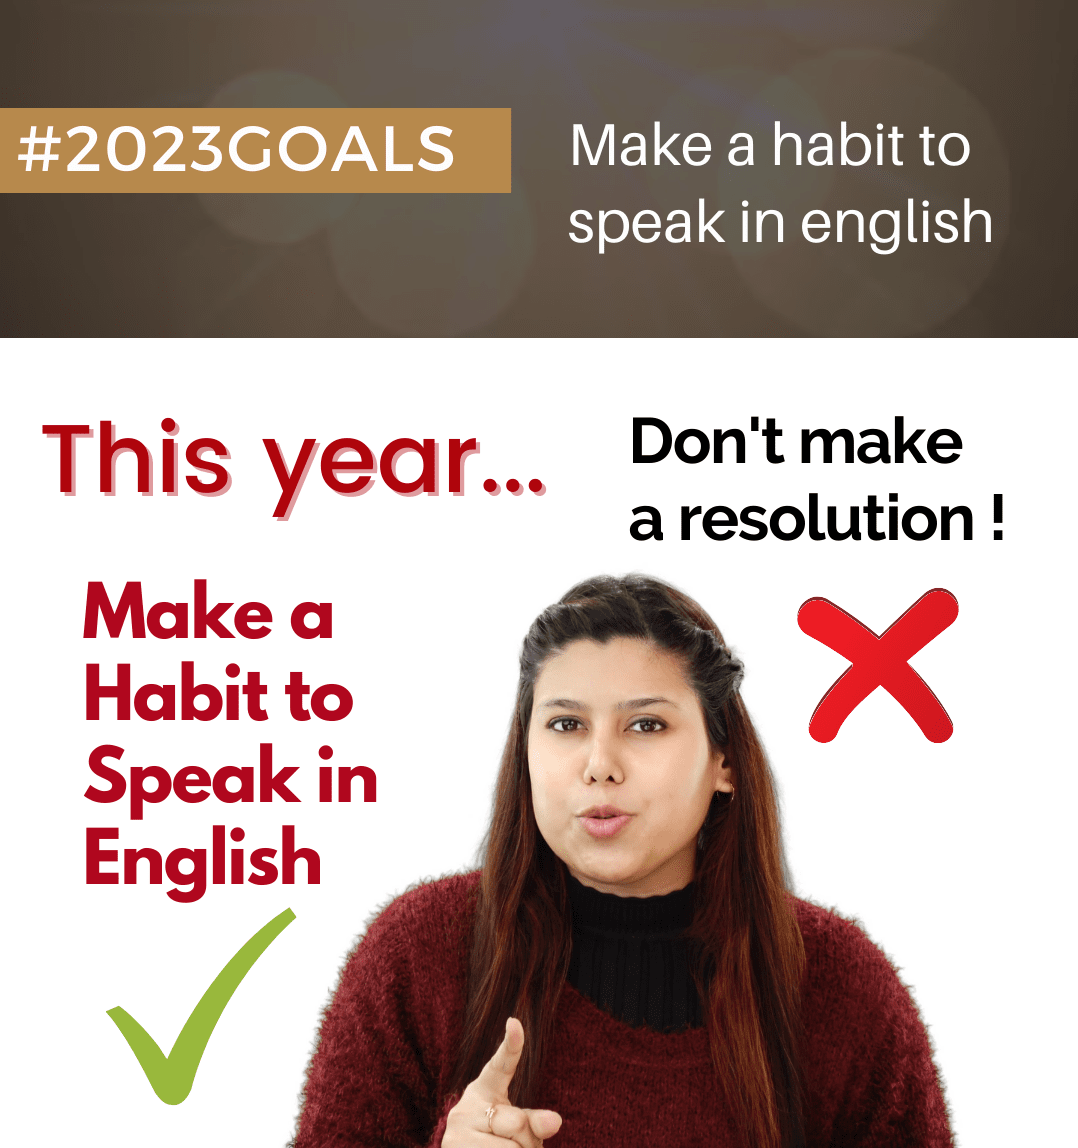 Build a Habit to speak in English